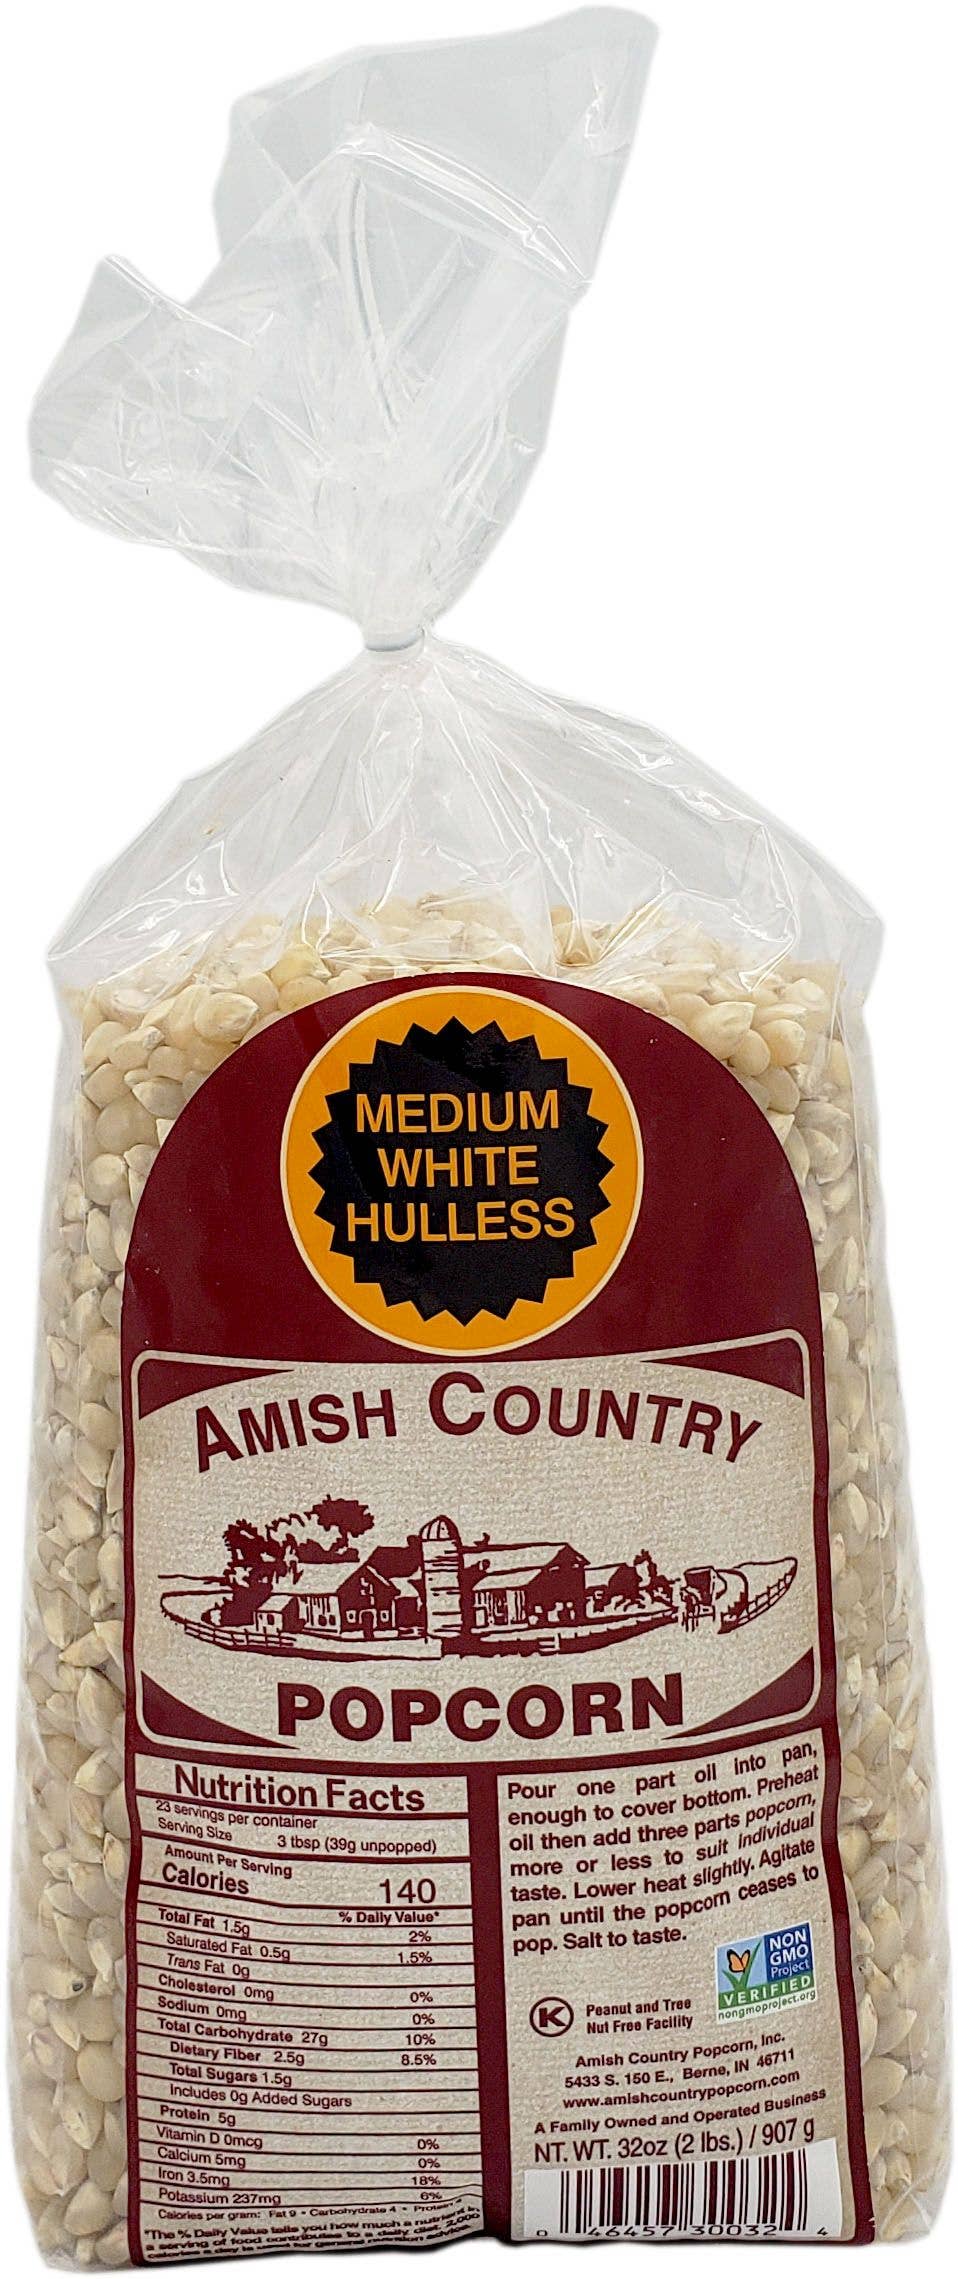 Amish Country Popcorn | 2lb Bag of Medium White Popcorn